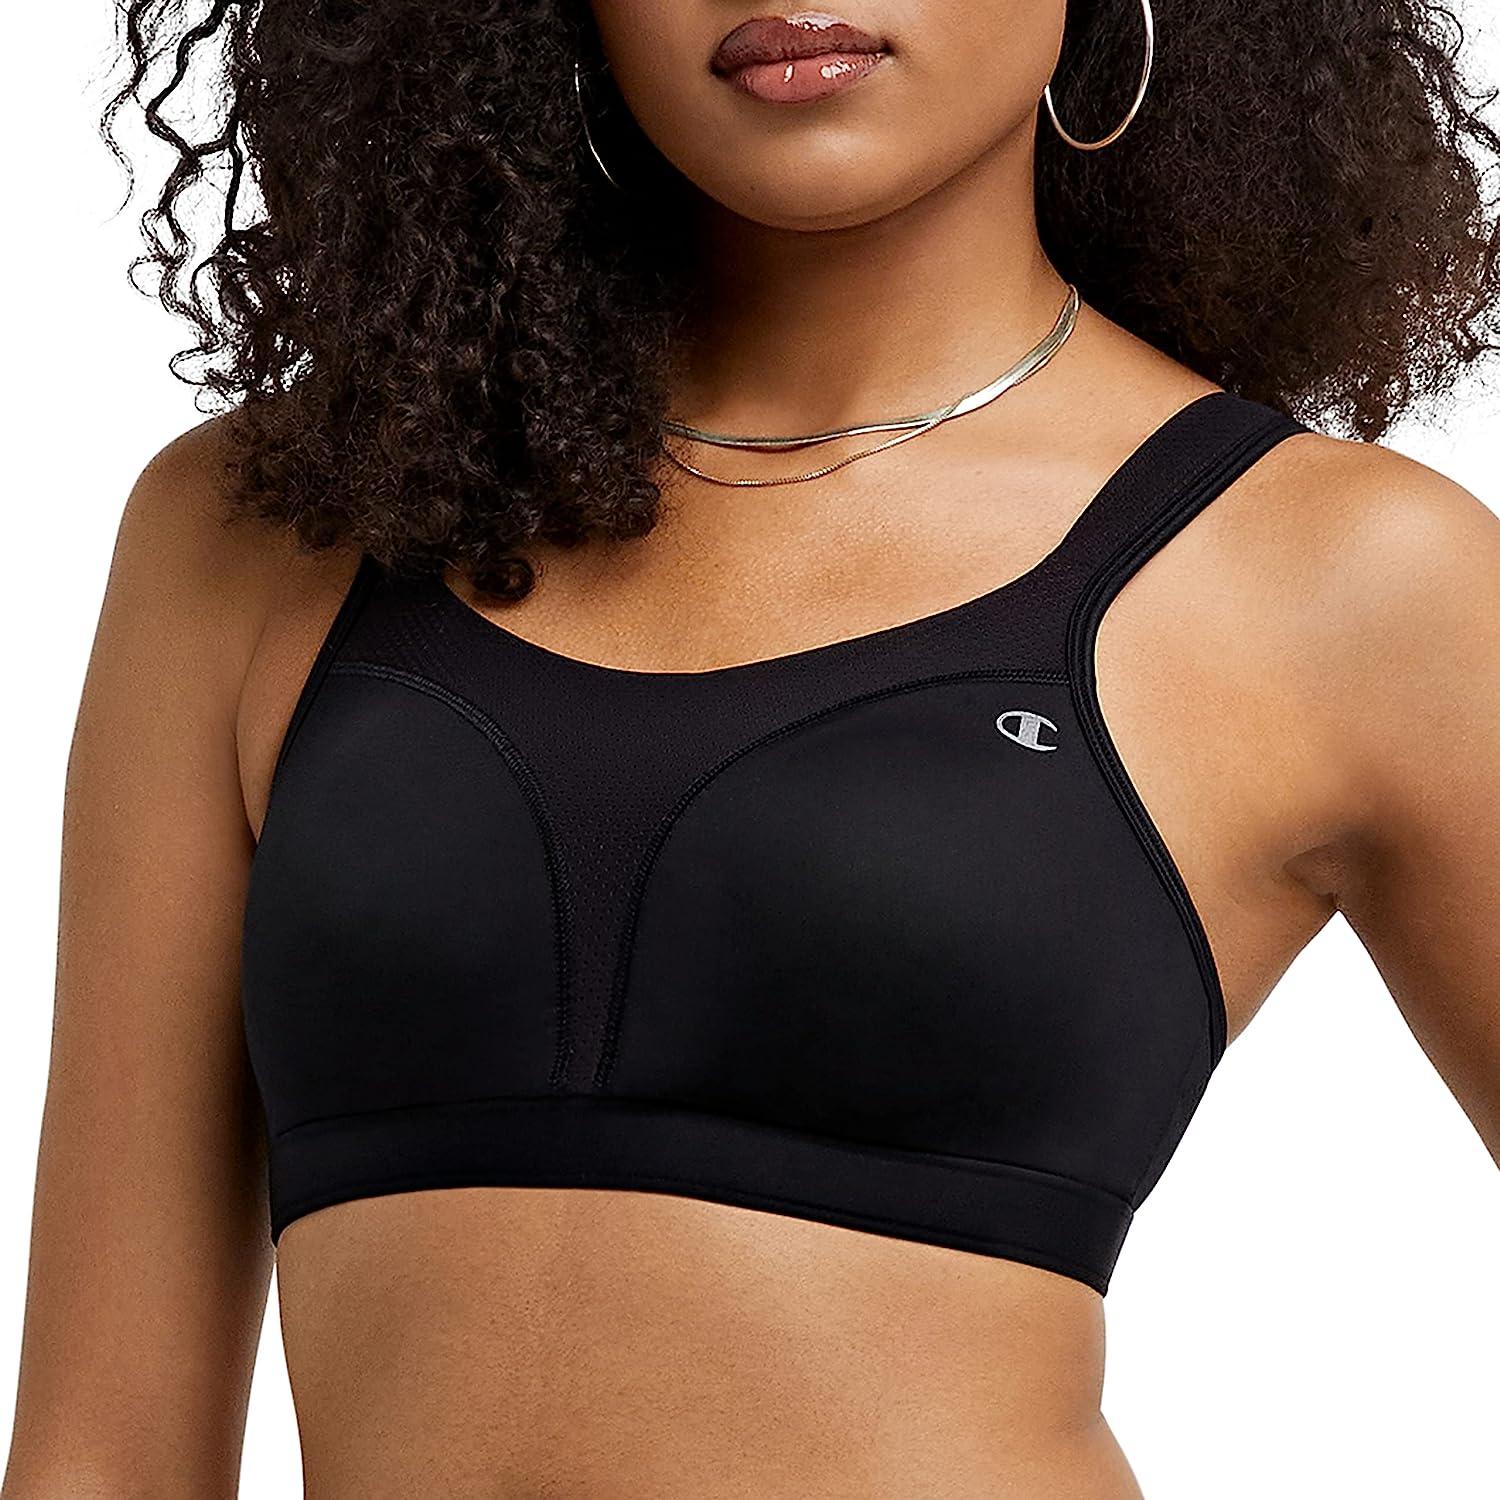 Sports branded bra low price - Women - 1737236108